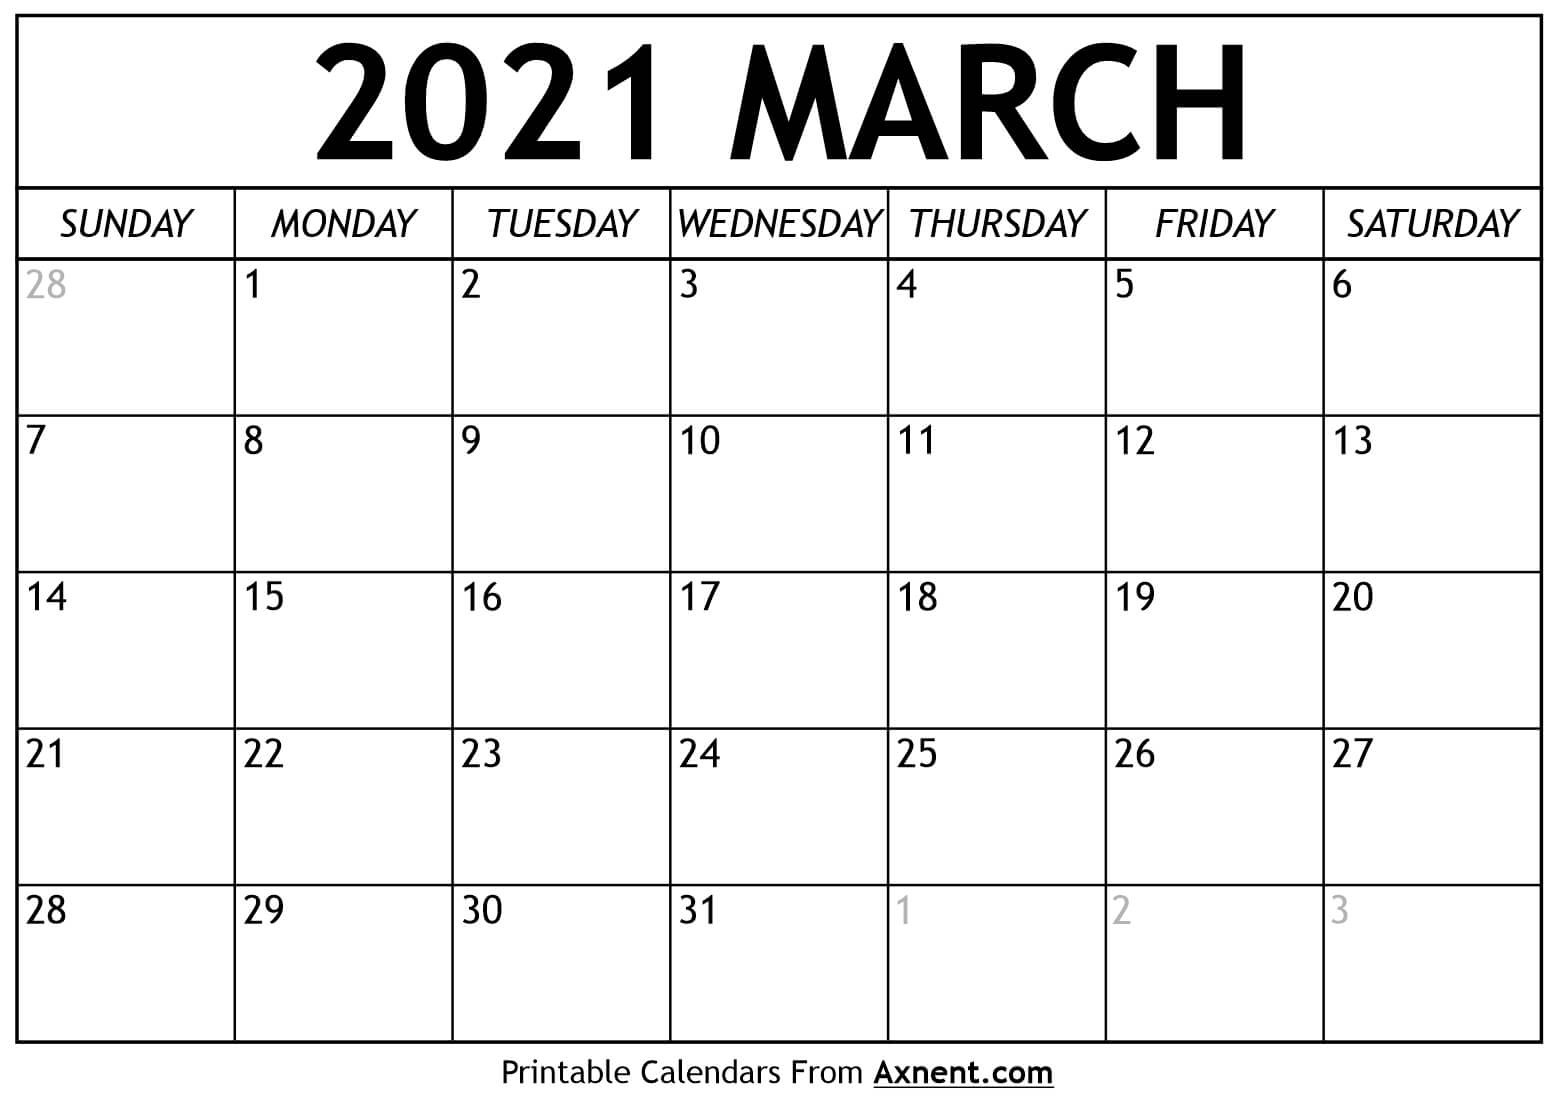 Printable March 2021 Calendar Template - Time Management-March Calendar 2021 Printable